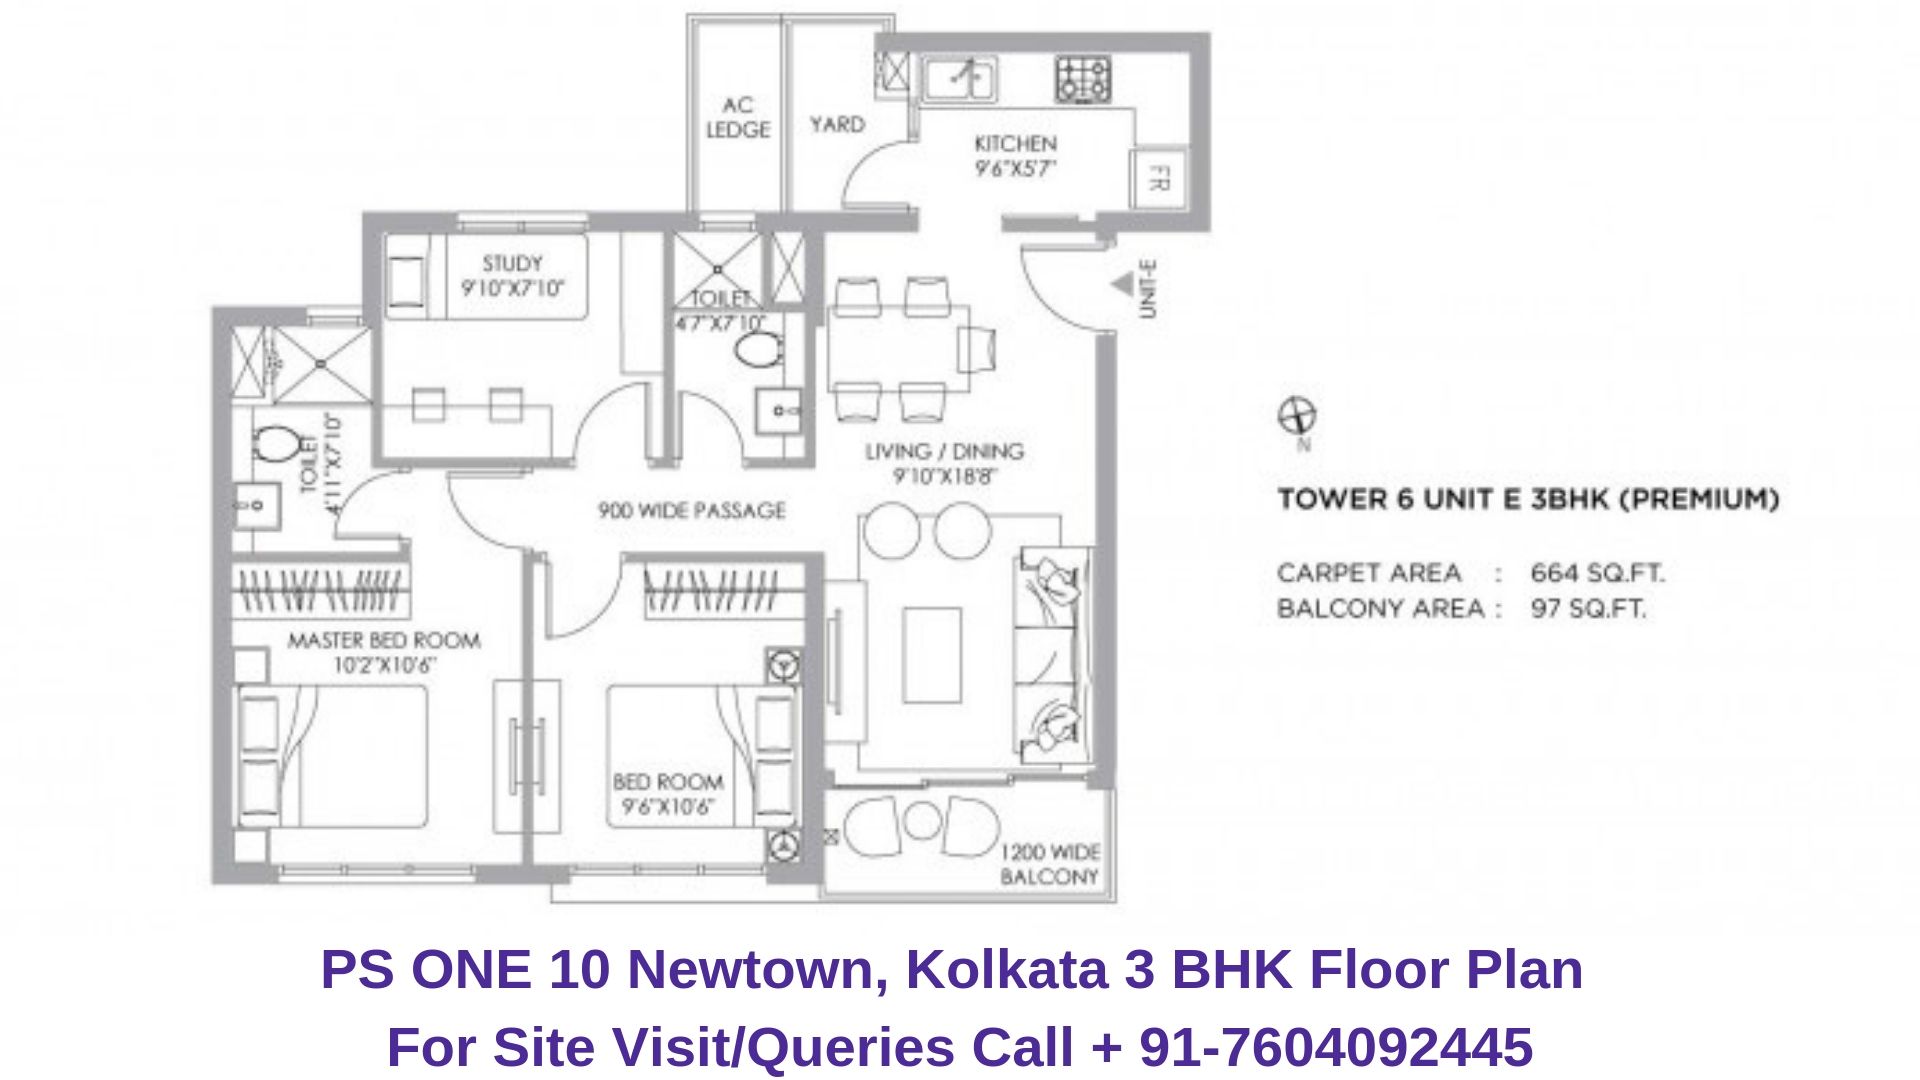 PS ONE 10 Newtown, Kolkata 3 BHK Floor Plan